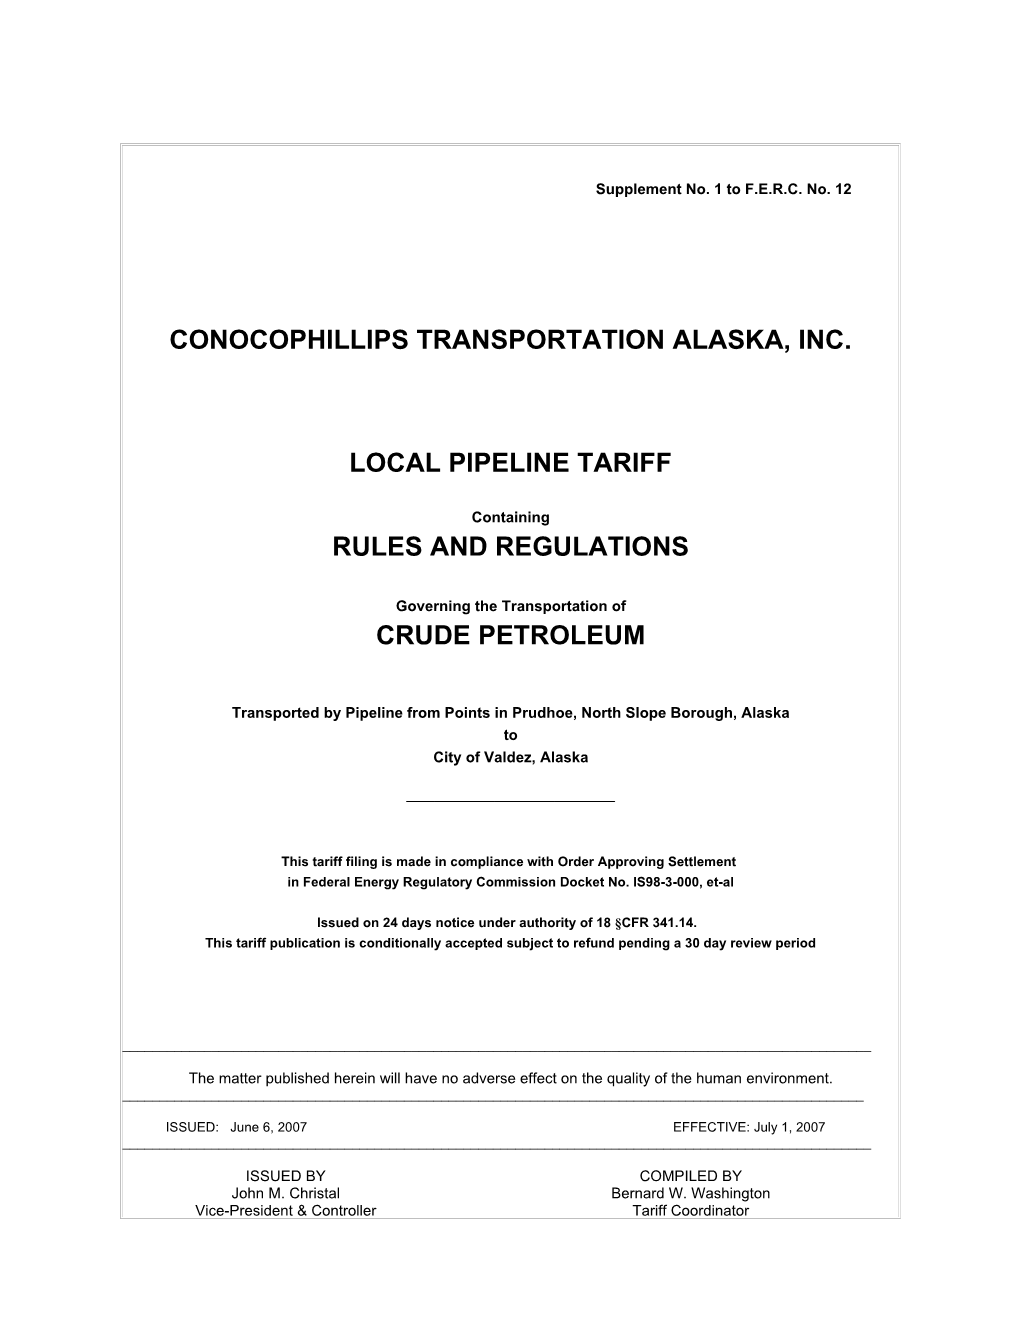 Conocophillips Transportation Alaska, Inc